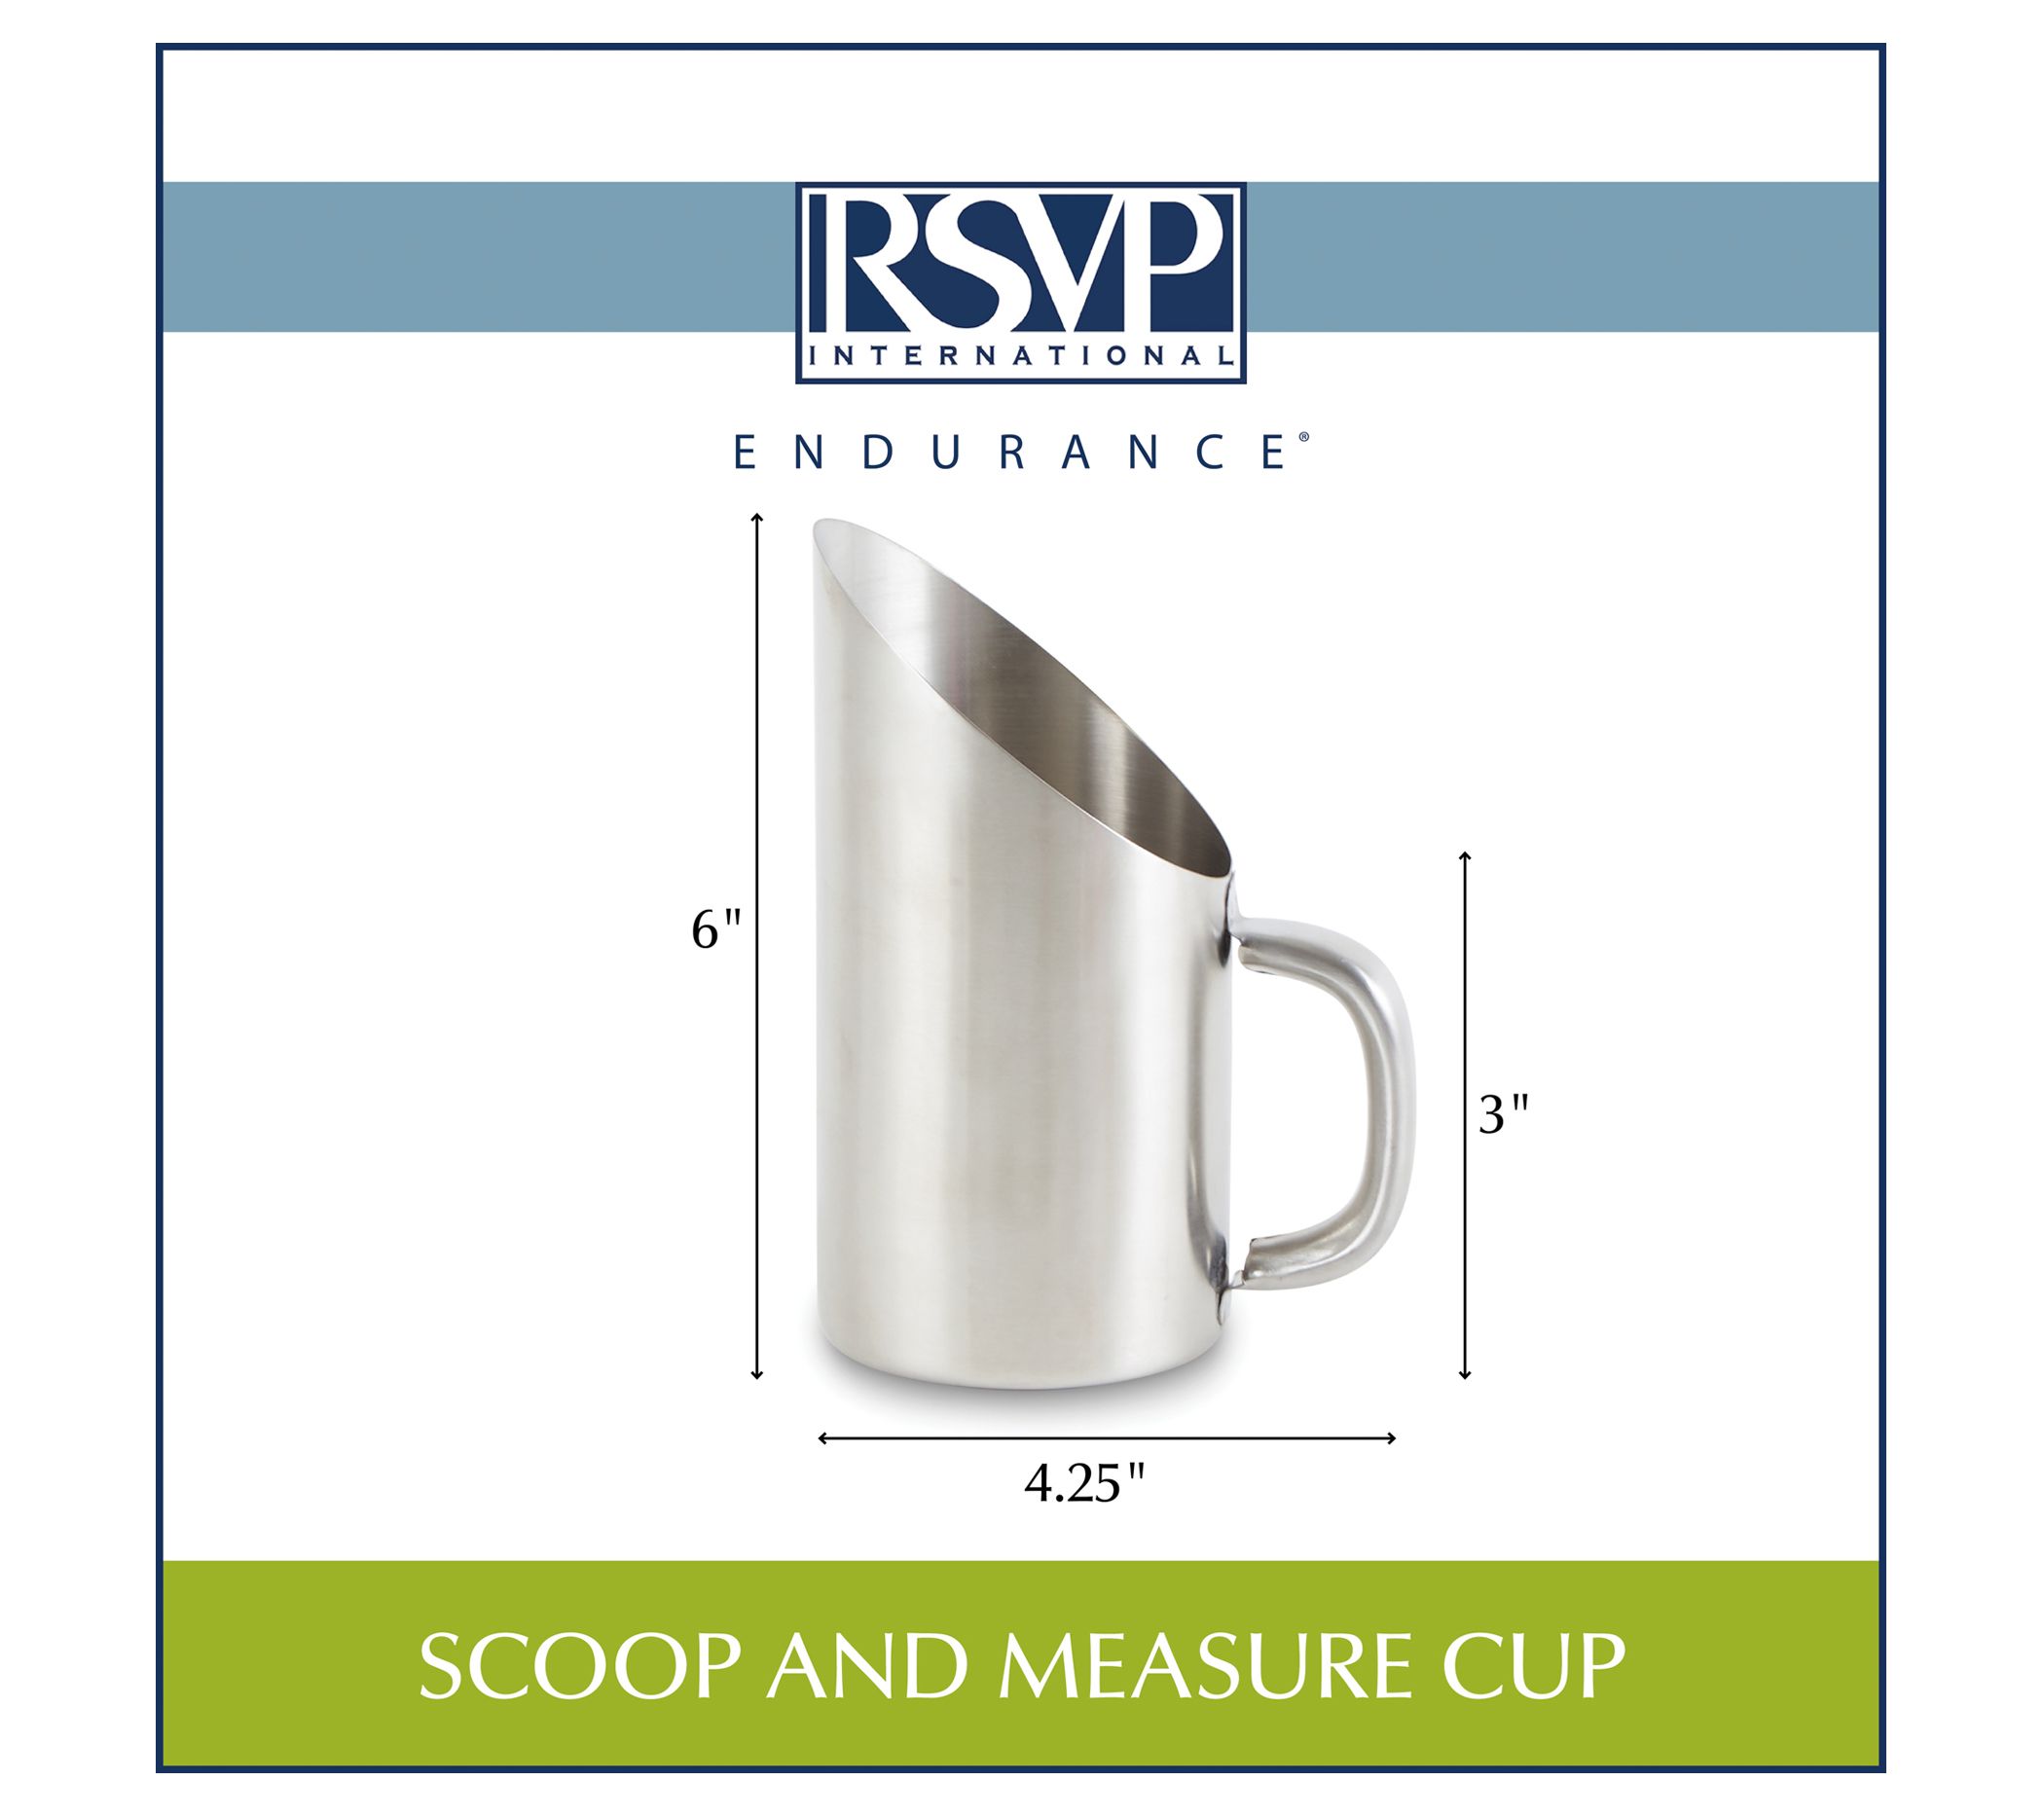 Rsvp Endurance 5 Piece Measuring Cup Set